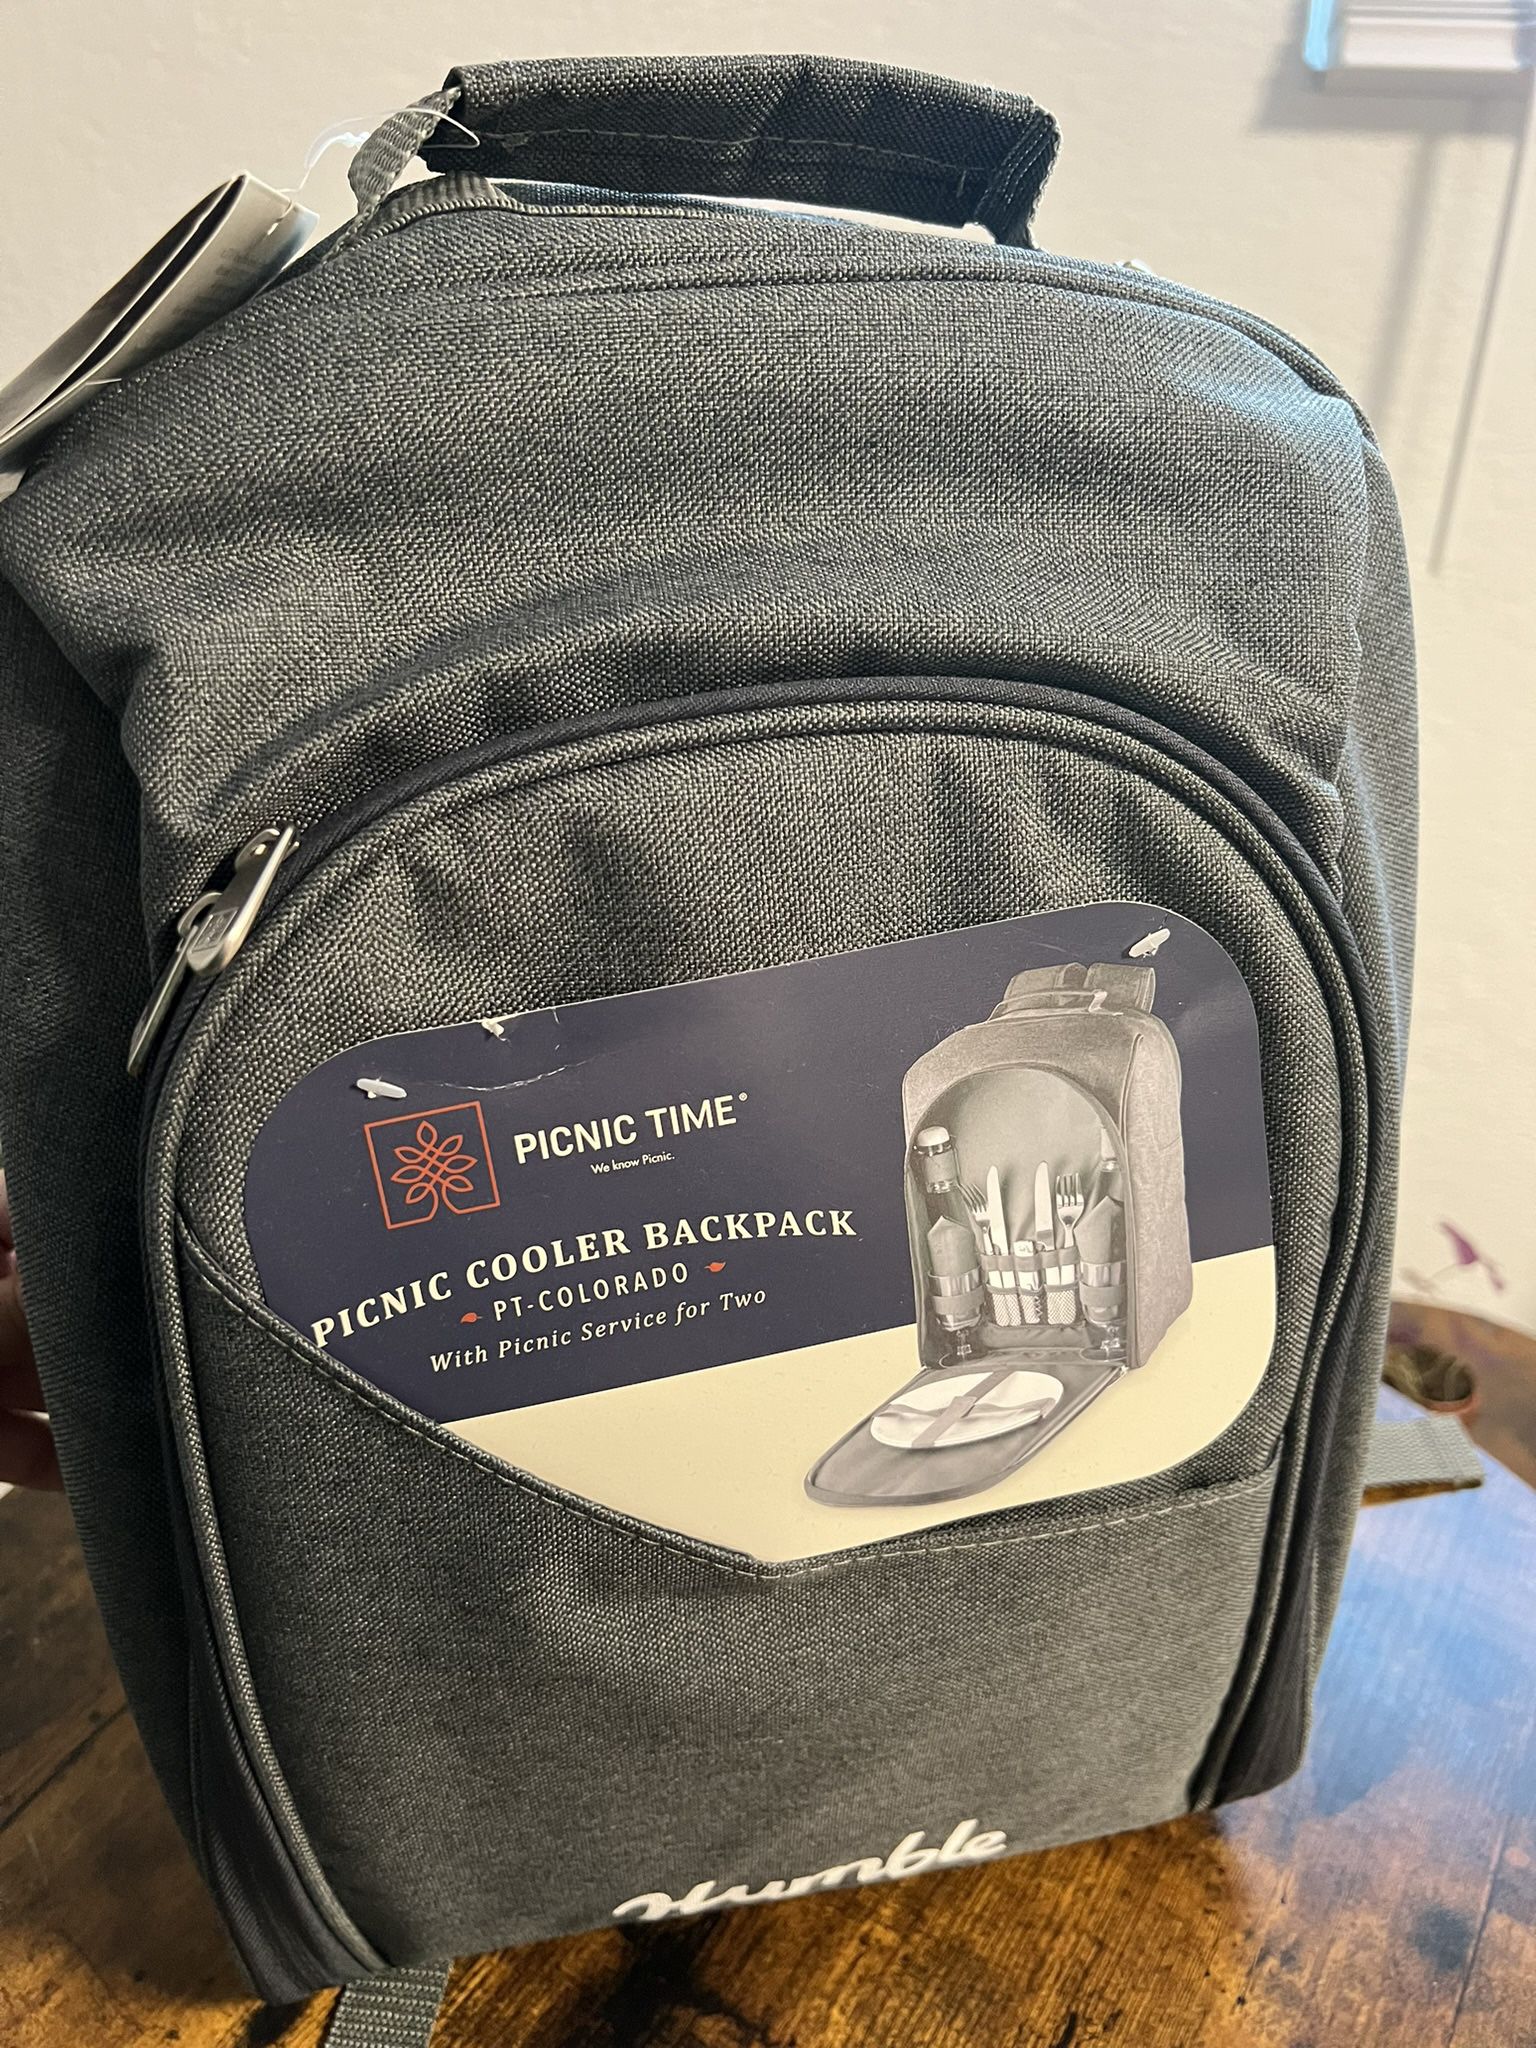 Picnic Time Picnic Cooler Backpack